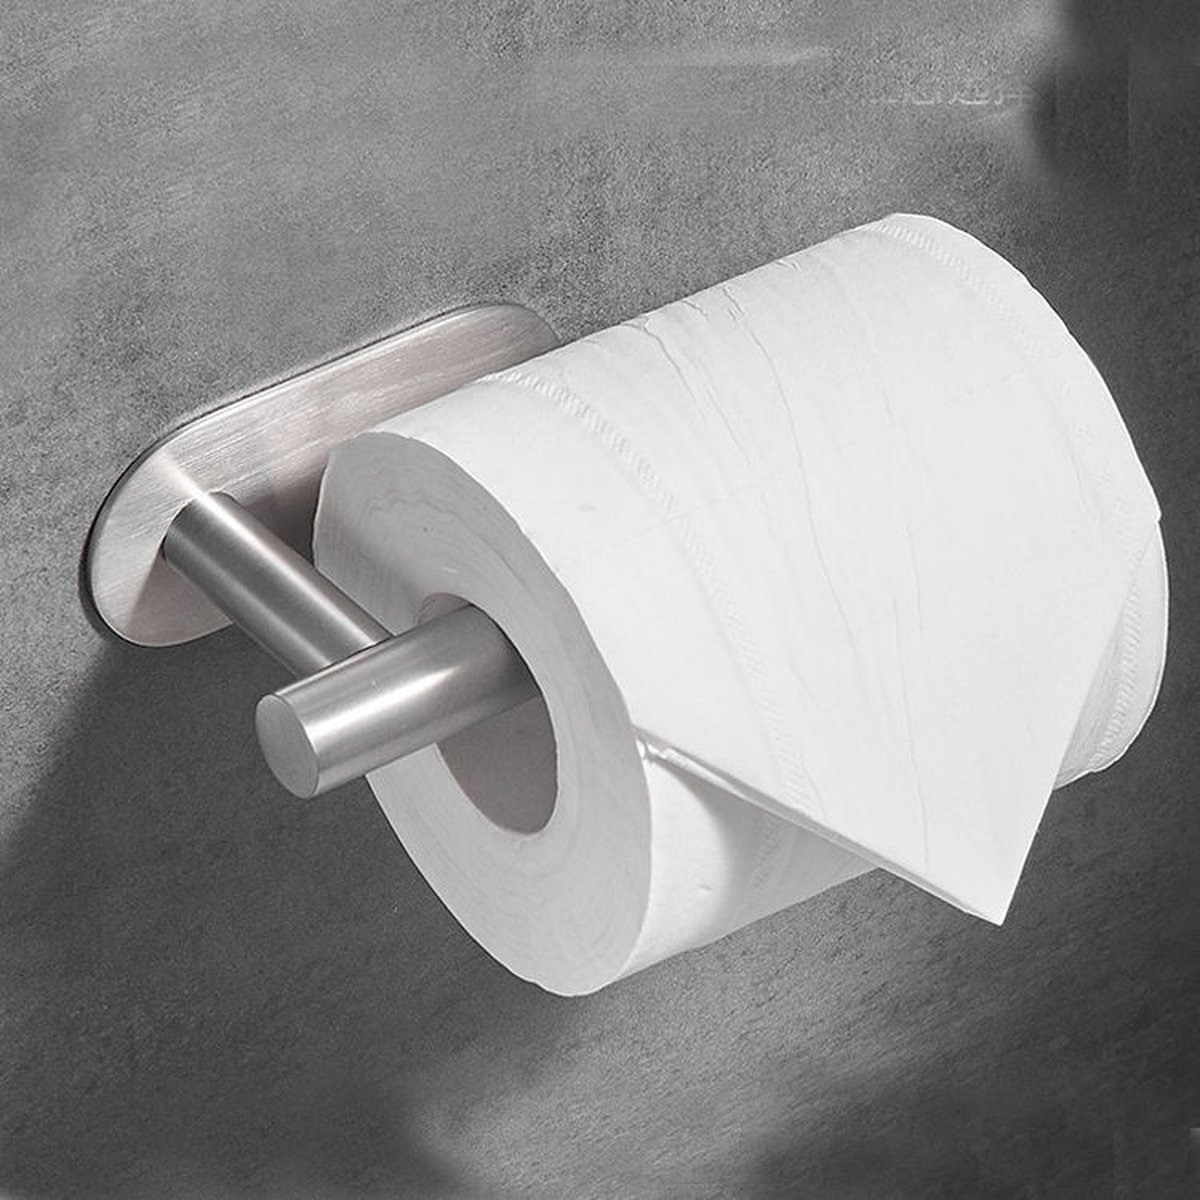 Repus - Zelfklevende Toiletpapier houder - Toiletrolhouder - Wc papier houder - Zonder te boren - Rvs - Zilver